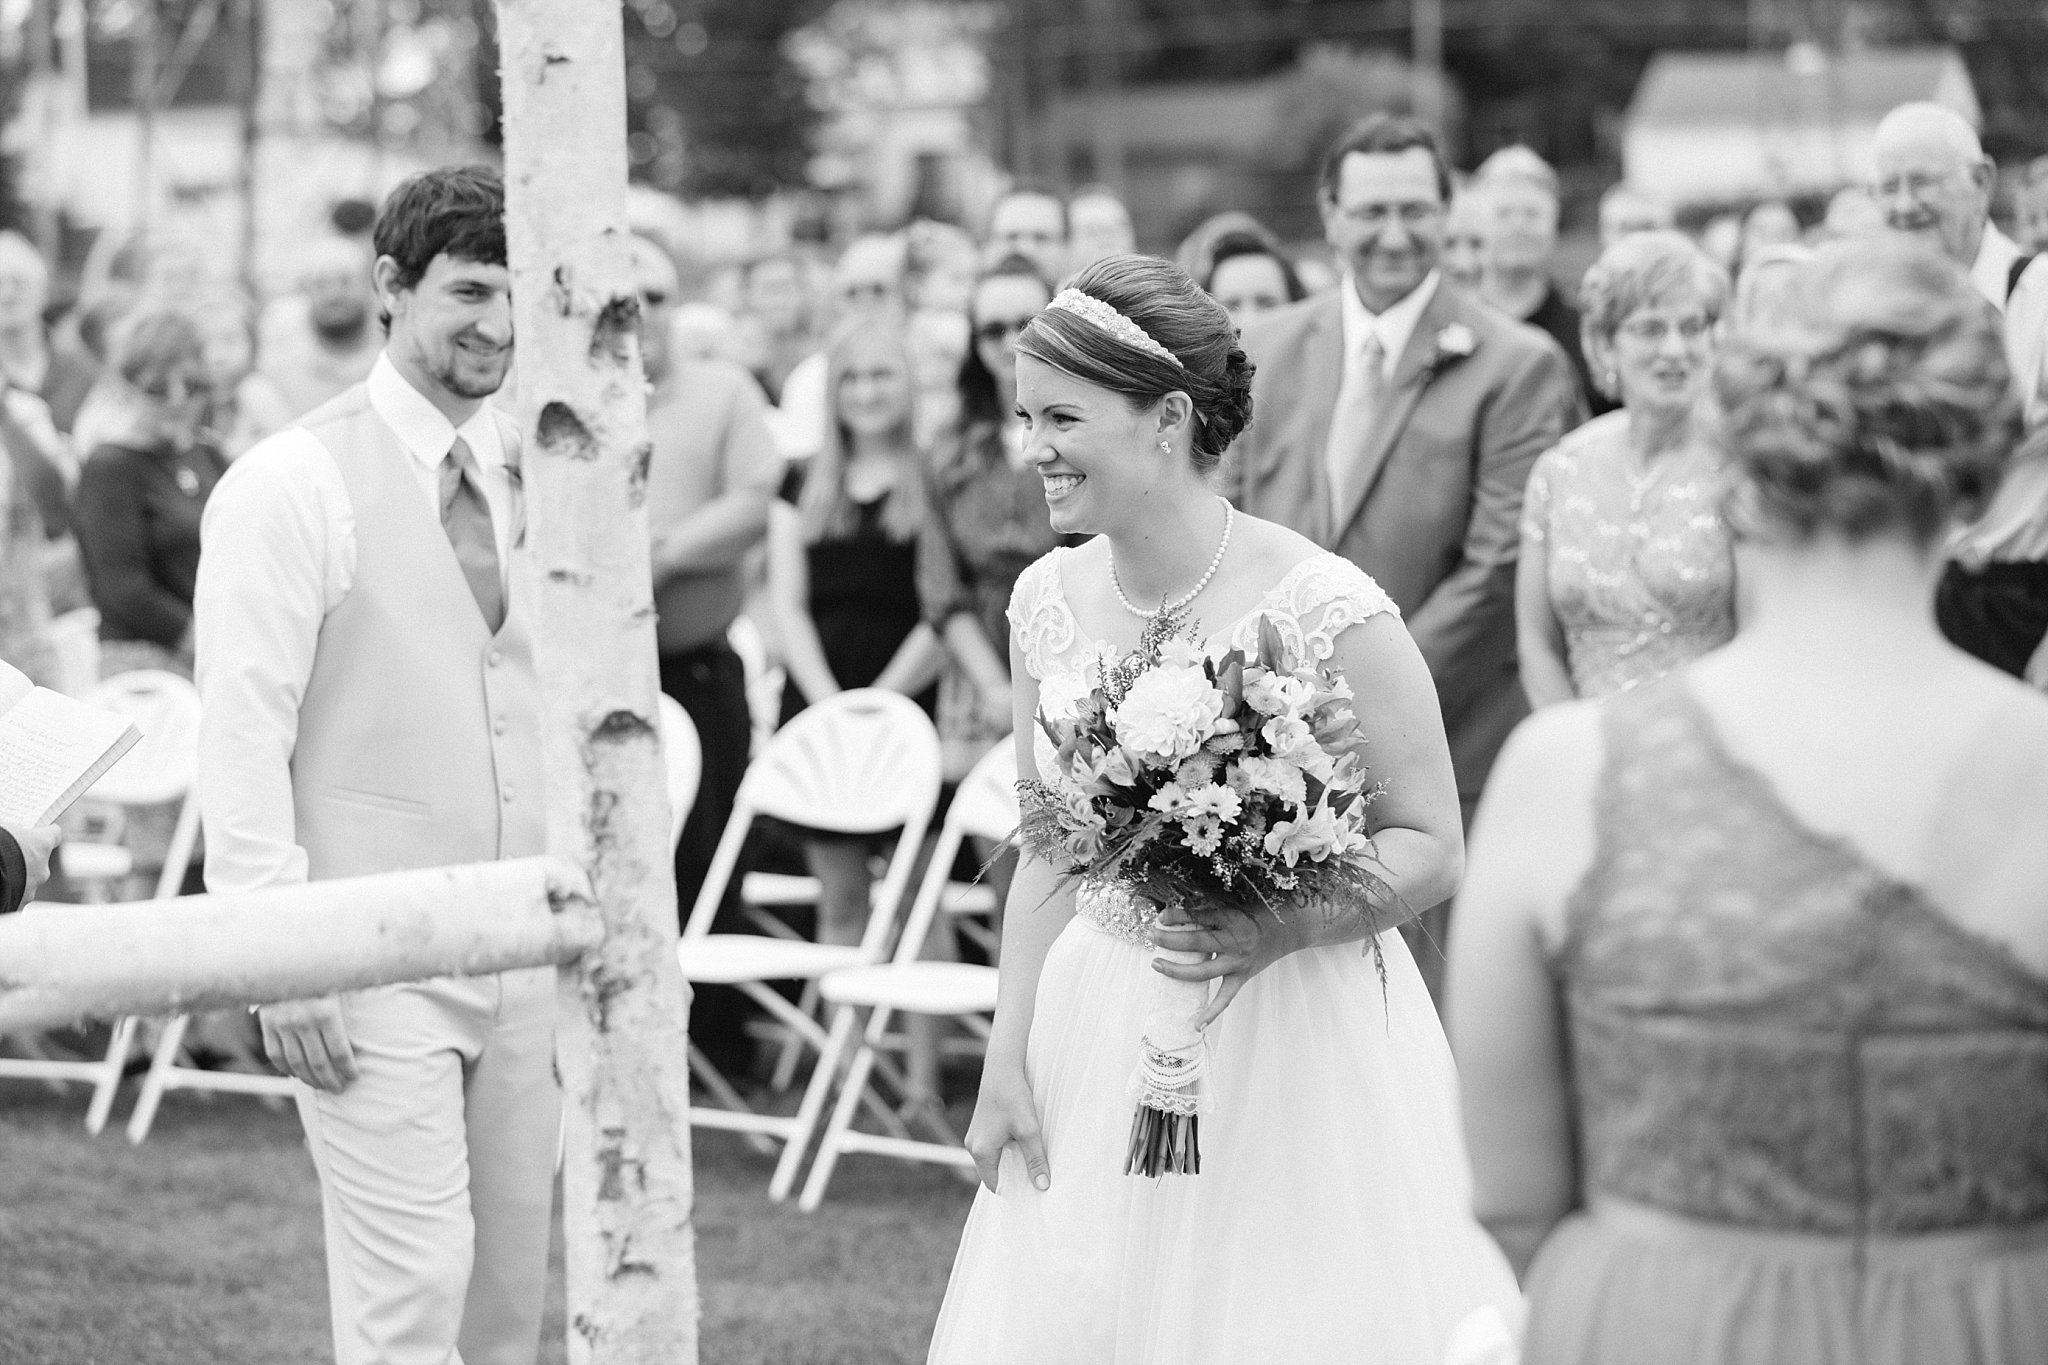 www.james-stokes.com | James Stokes Photography, LLC - Black and white wedding photos by Wisconsin wedding photographer